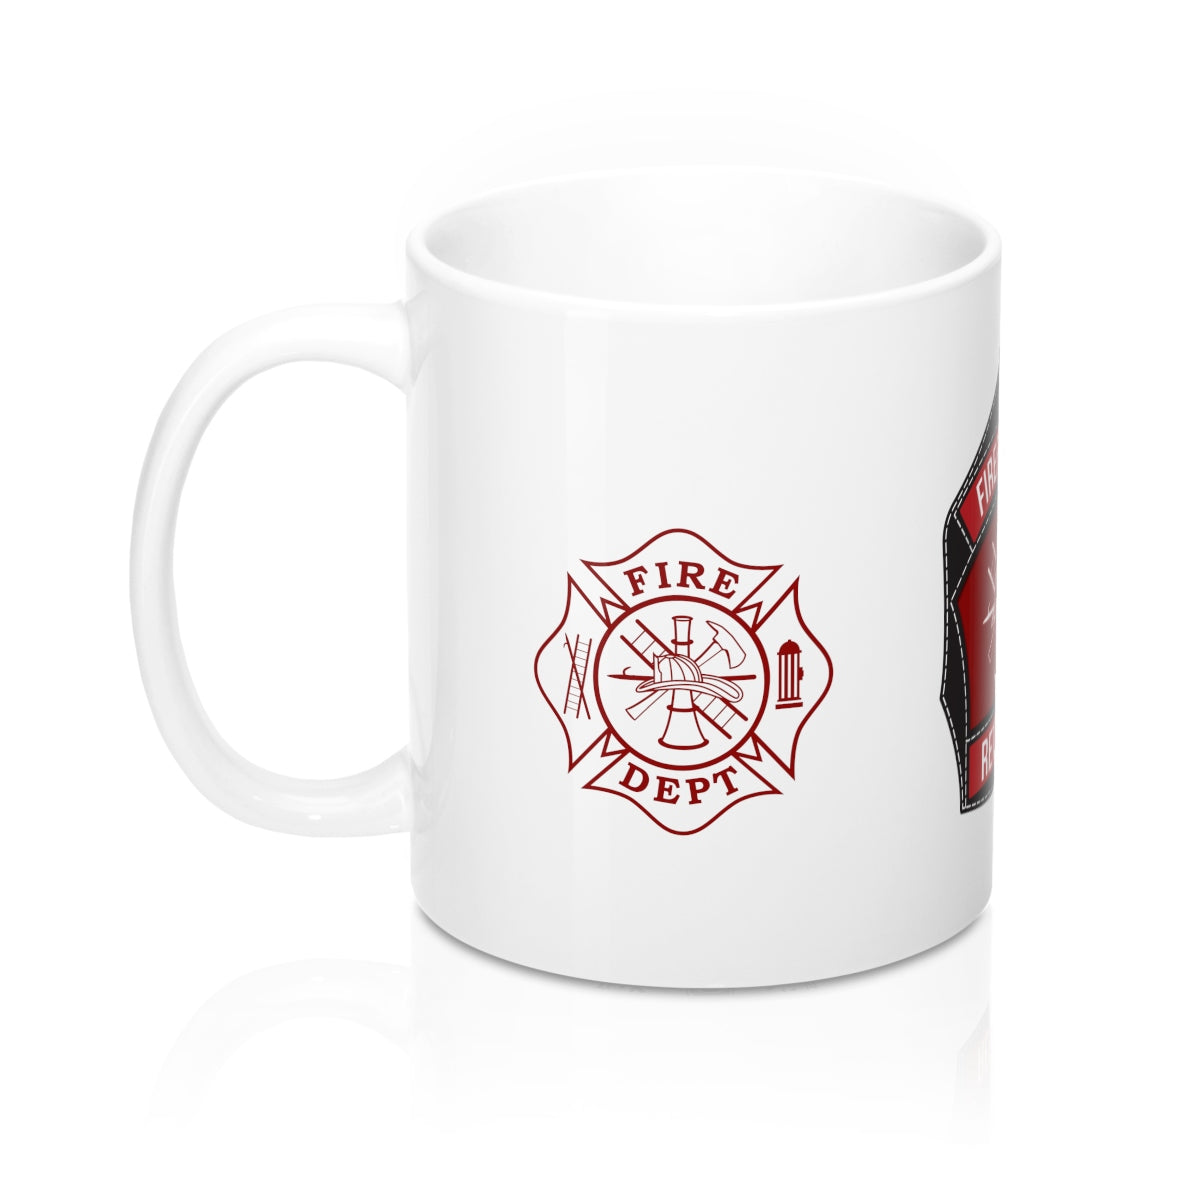 Retired Firefighter Mug 11oz - firestationstore.com